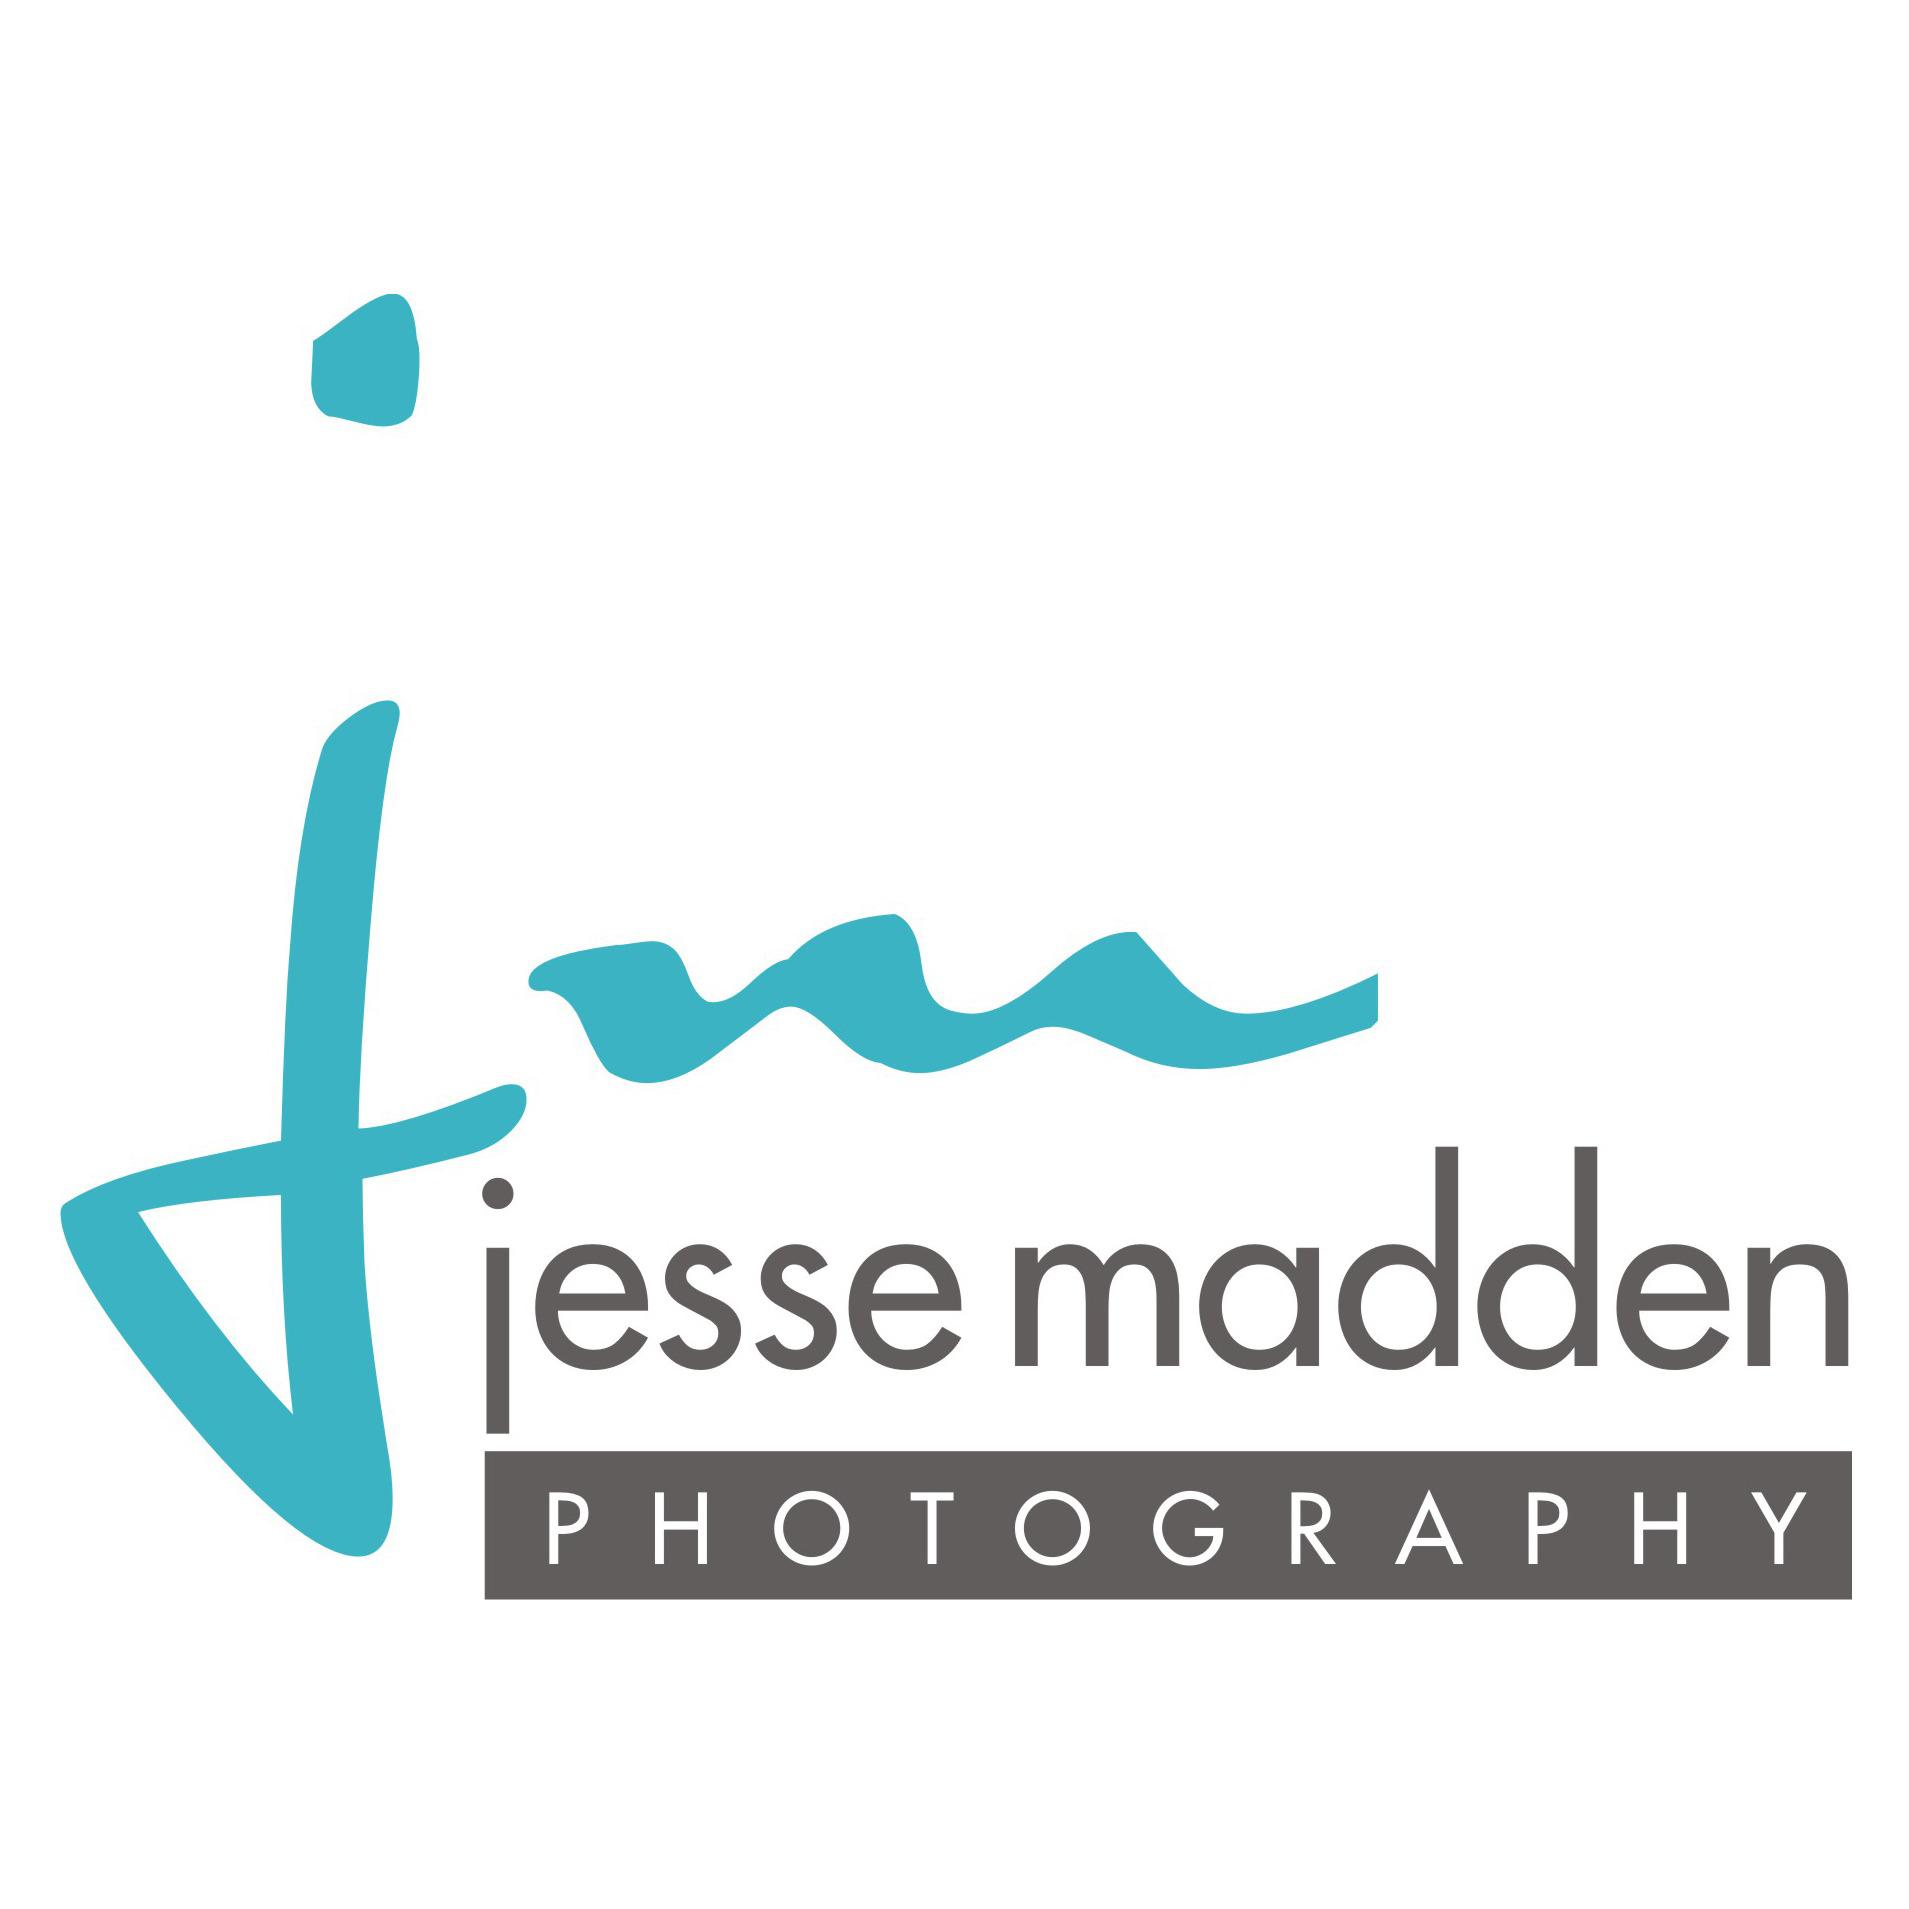 Jesse Madden Photography